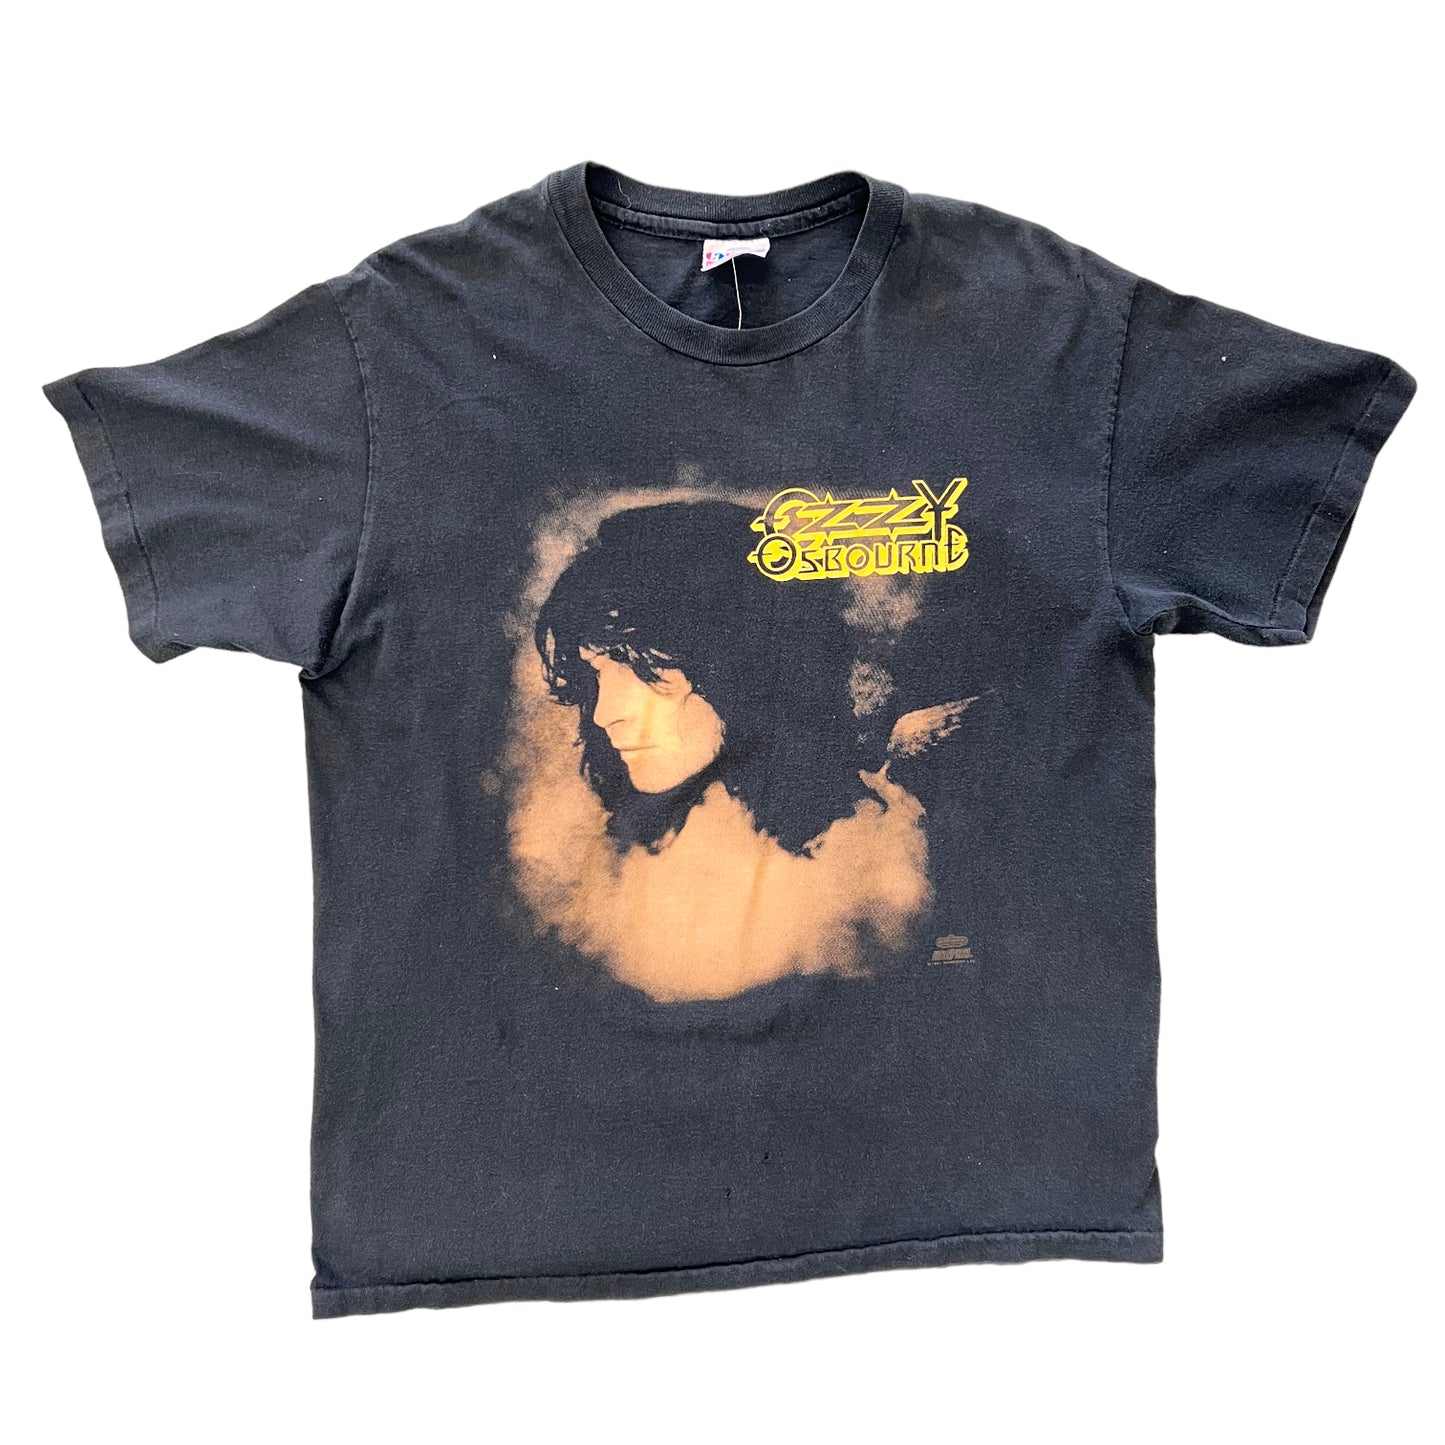 1991 Ozzy Osbourne no more tours tour shirt